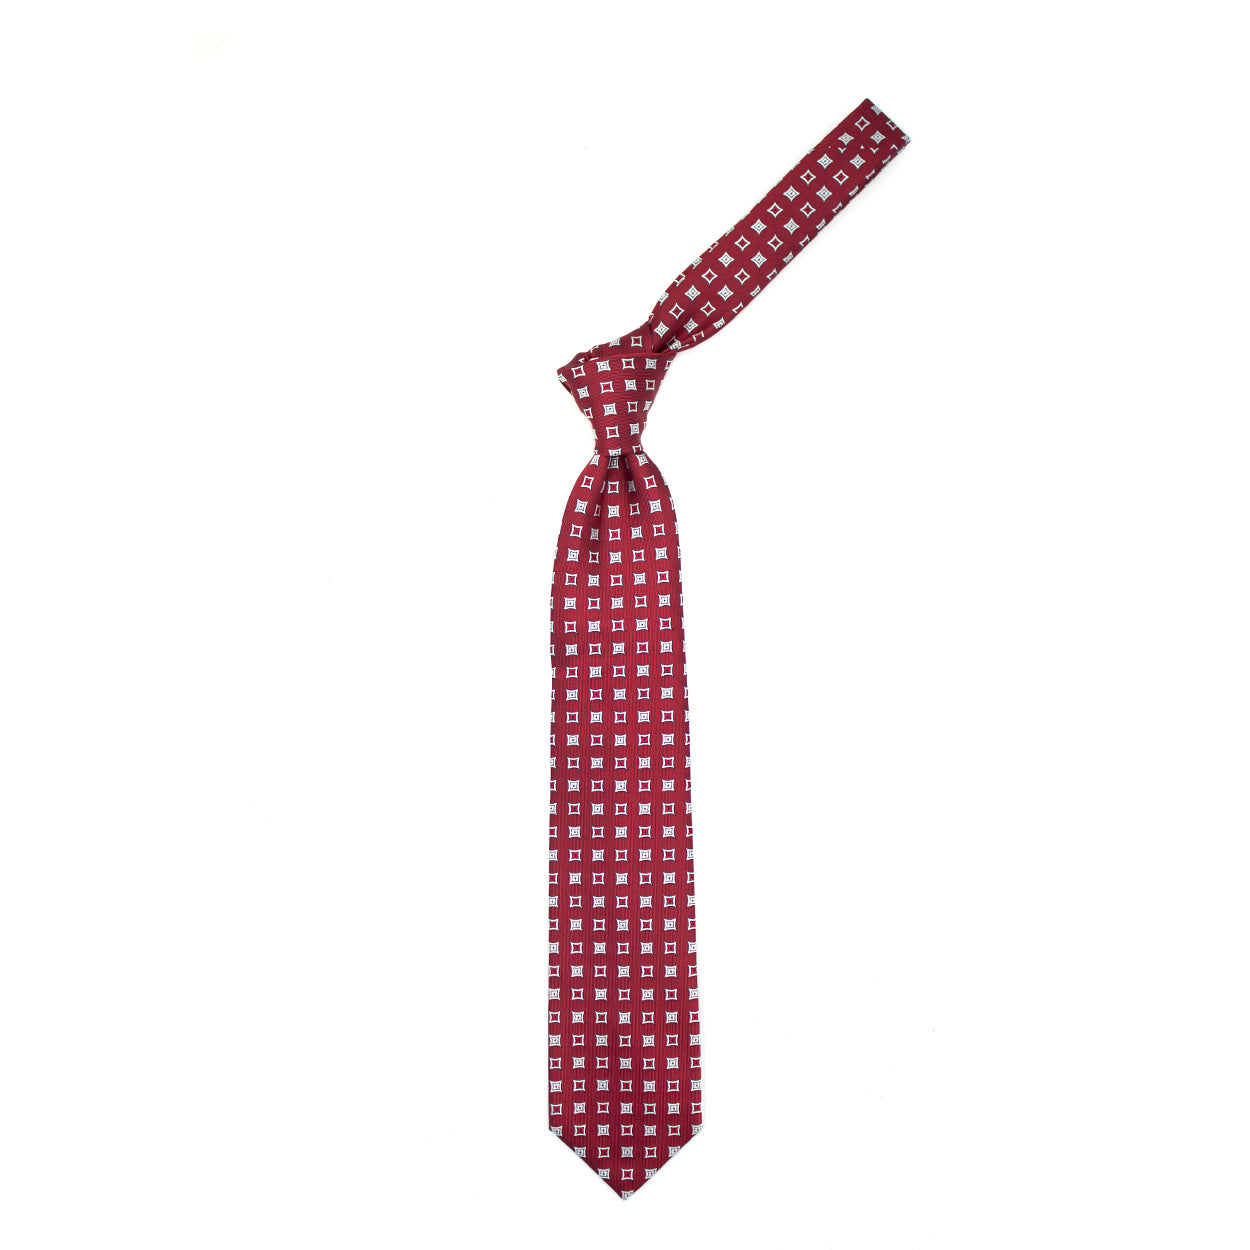 Cravatta rossa con quadrati bianchi